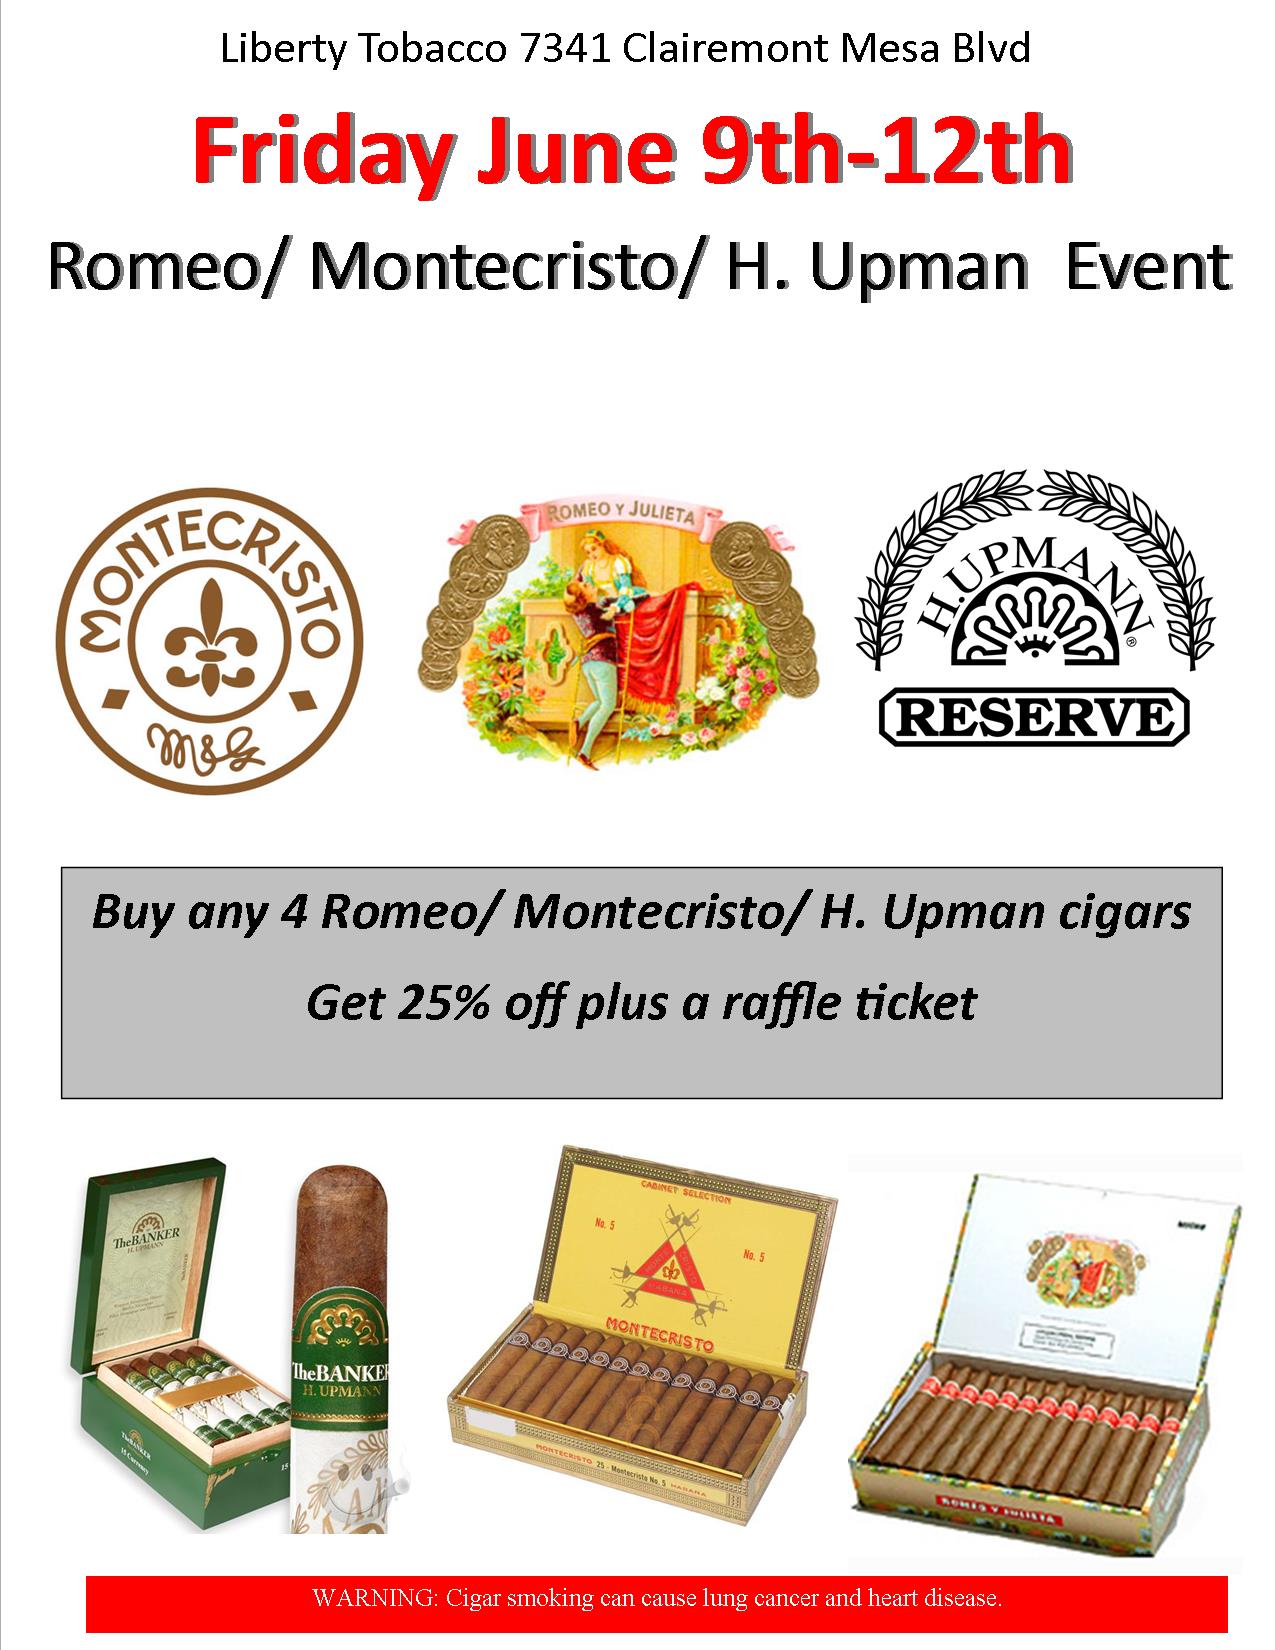 Romeo Y Julieta , Montecristo & H. Upman Event at Liberty Tobacco